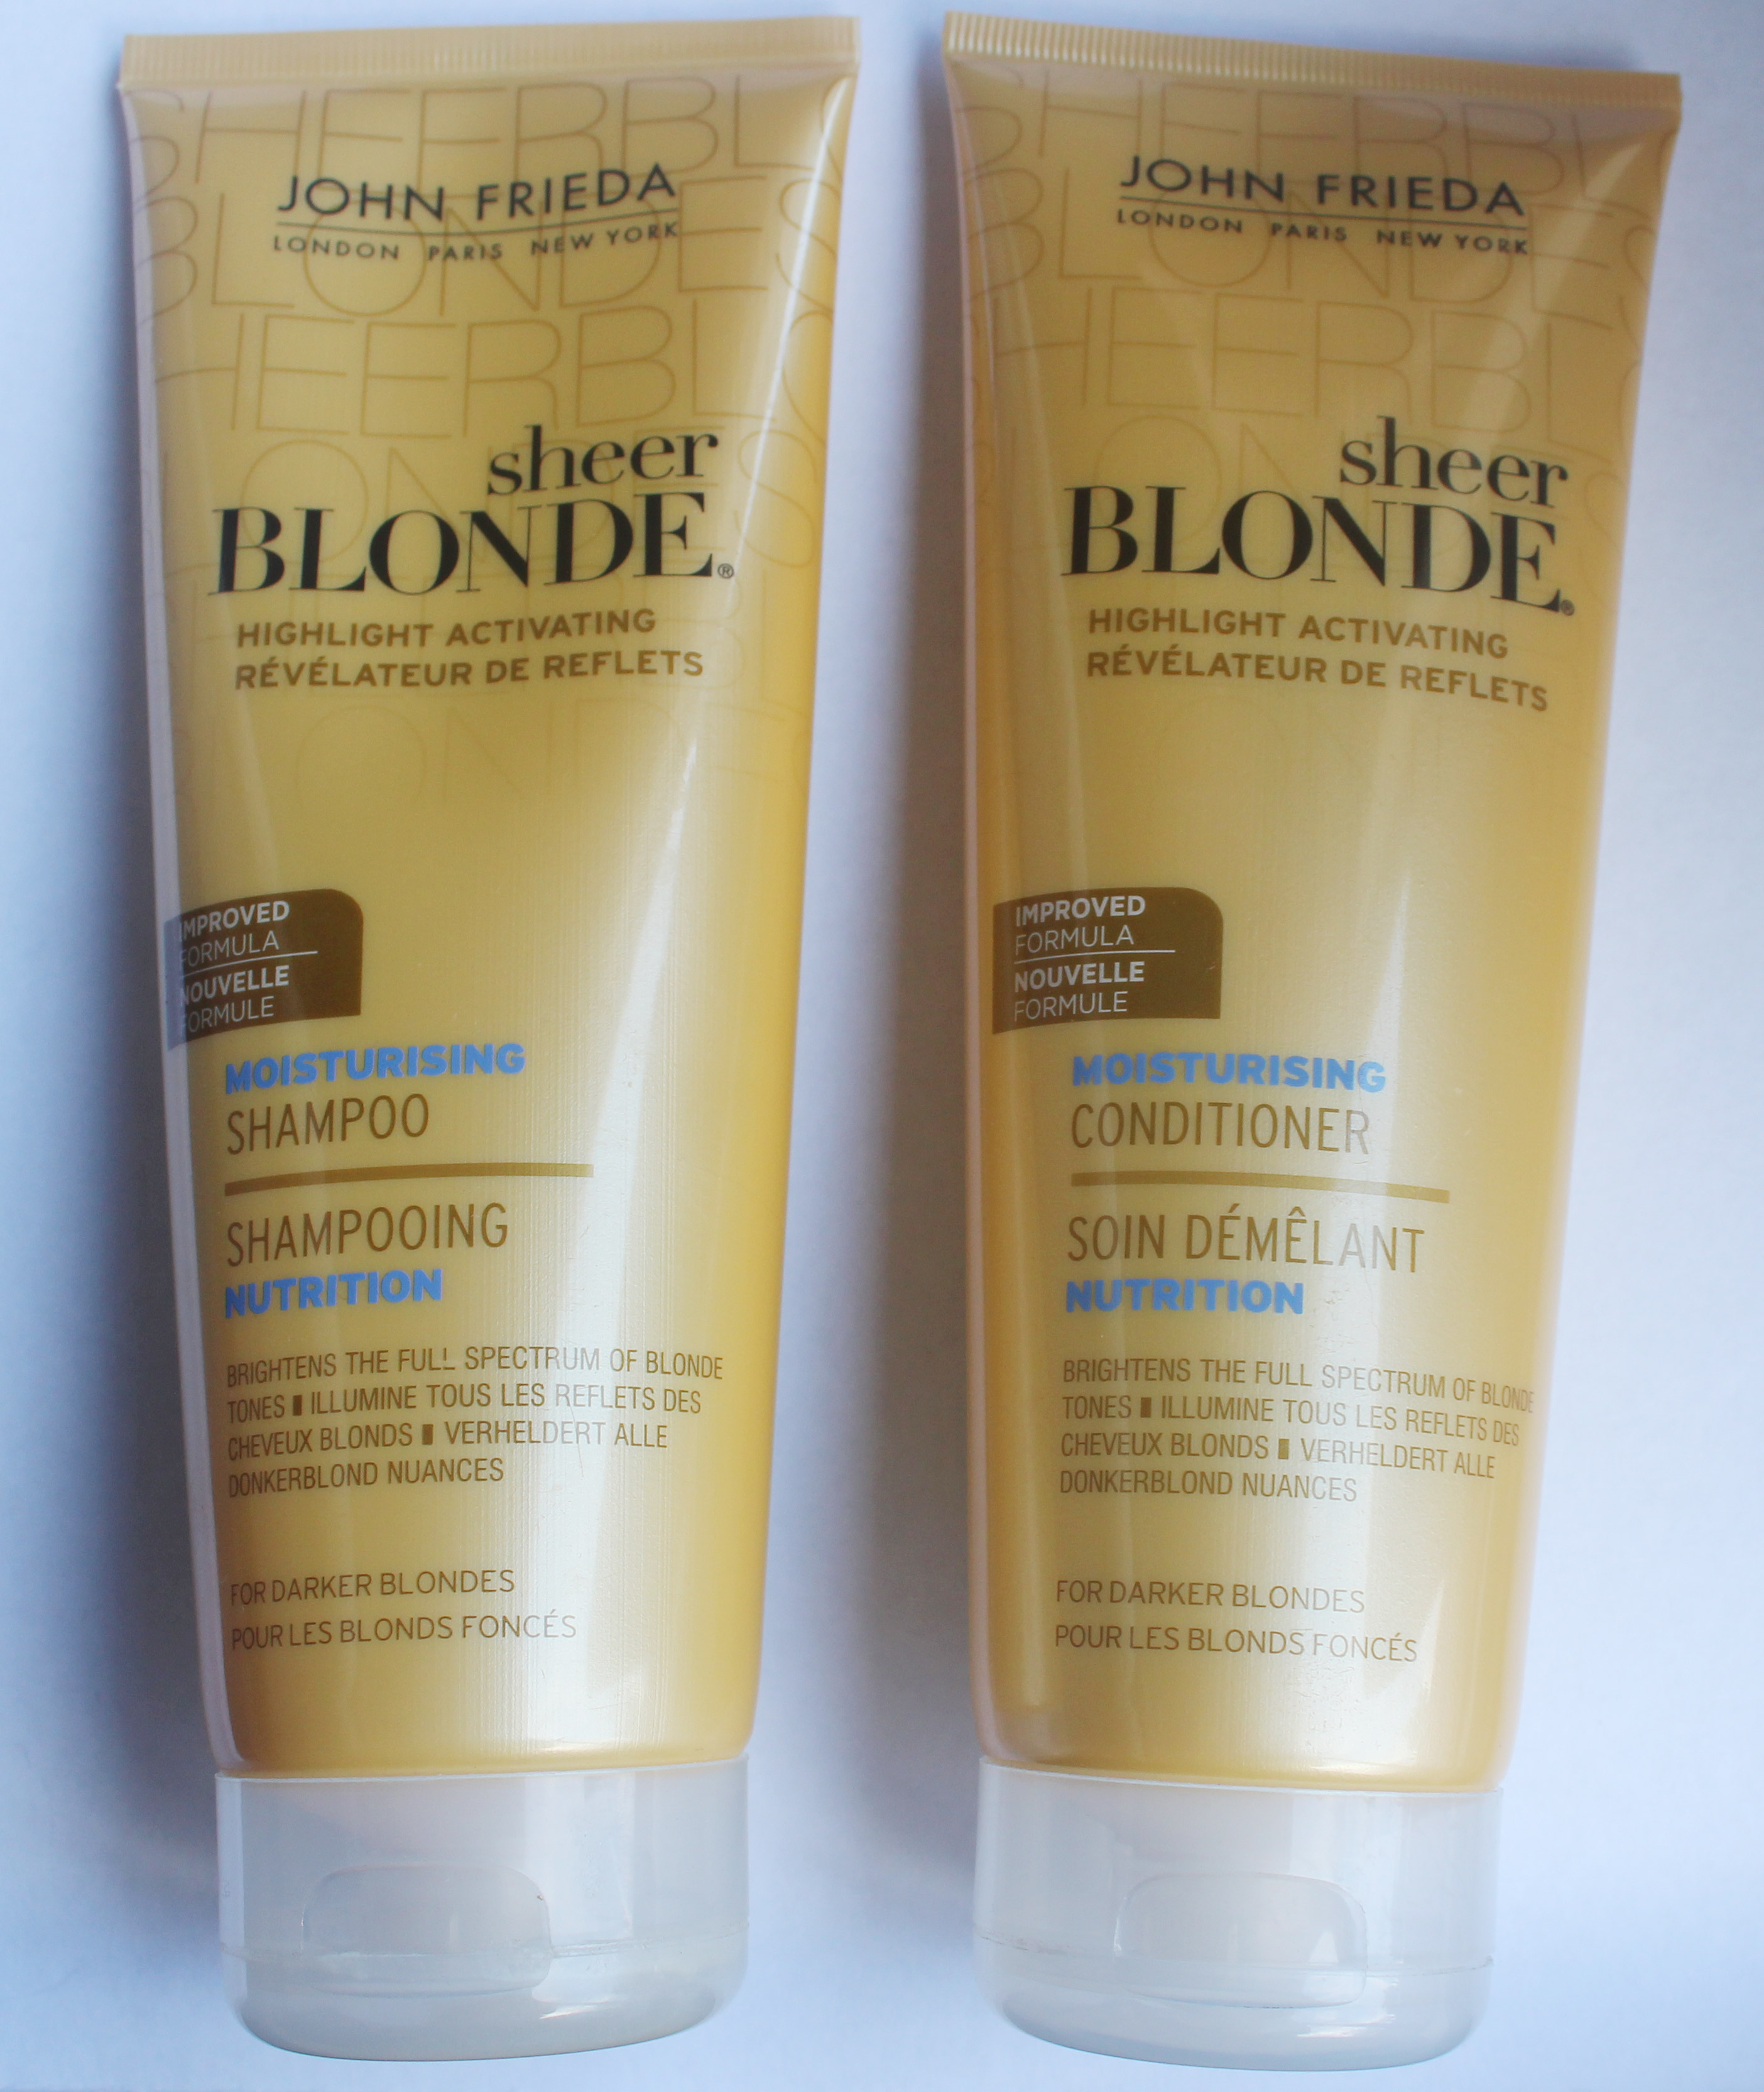 John Frieda Sheer Blonde Shampoo And Conditioner Reviews One